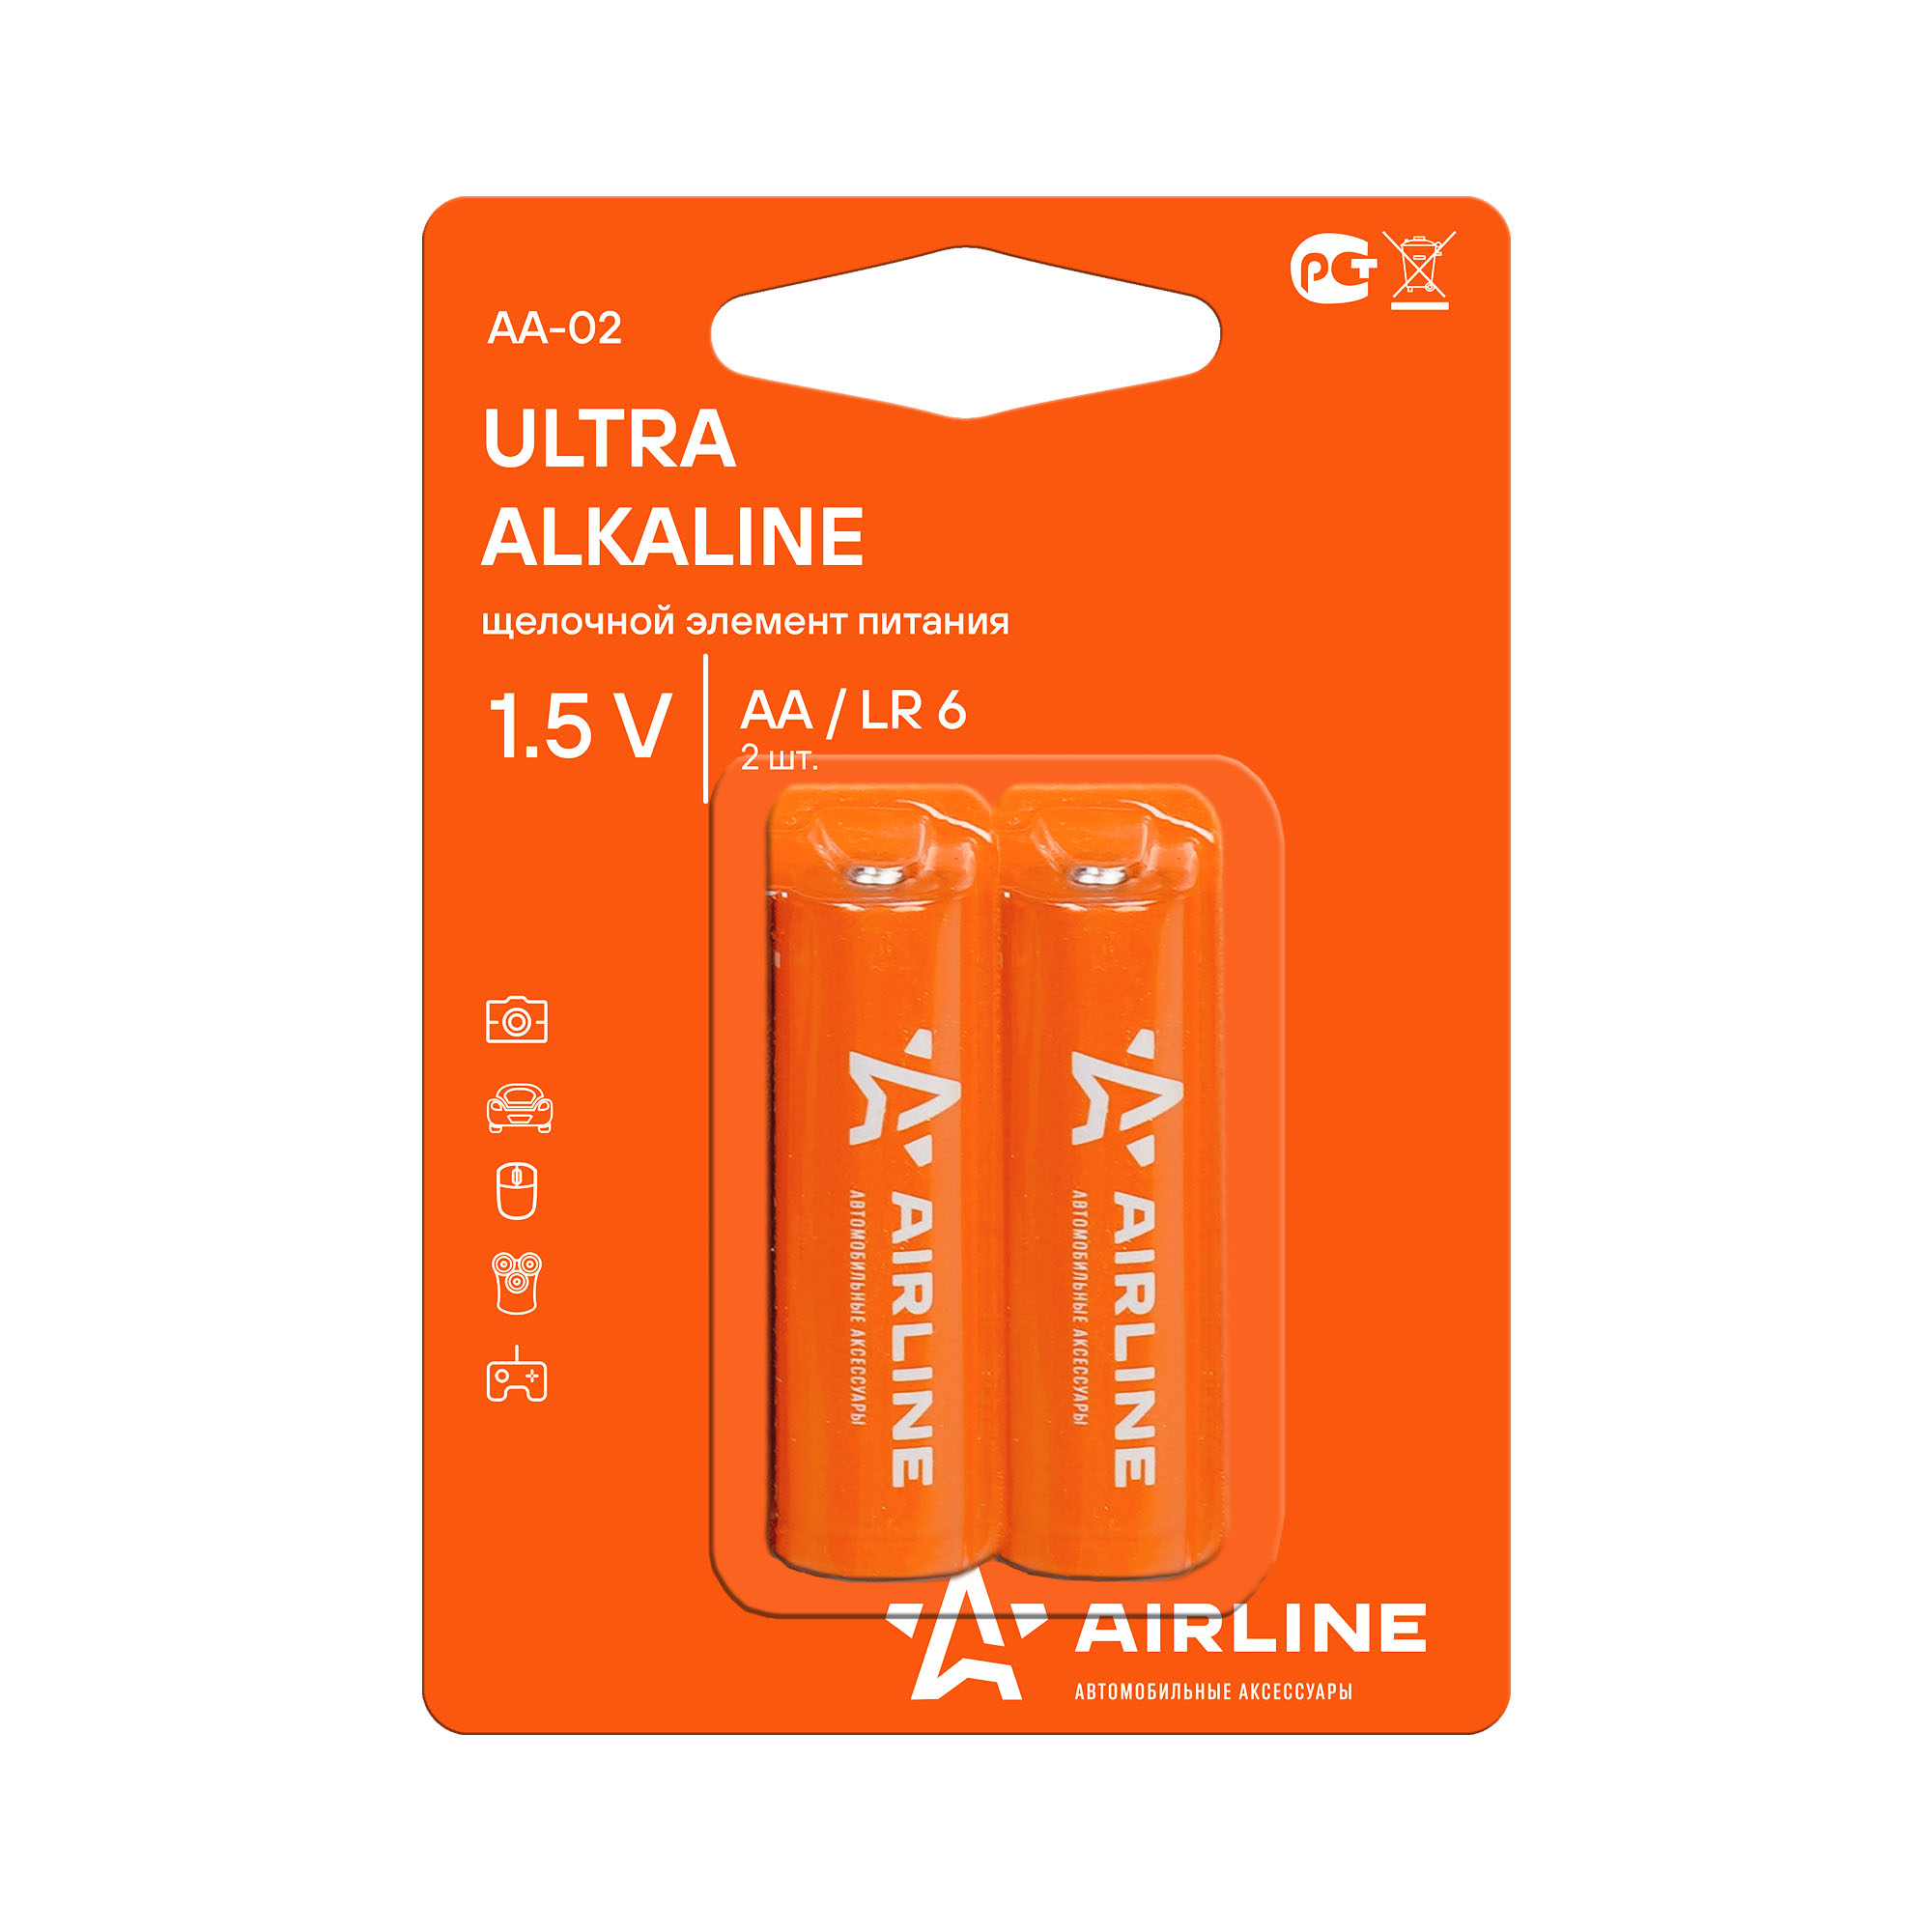 Батарейка алкалиновая AIRLINE ultra Alkaline AA 1,5V упаковка 2 шт. AA-02 батарейка алкалиновая airline ultra alkaline aa 1 5v упаковка 10 шт aa10 airline арт aa1